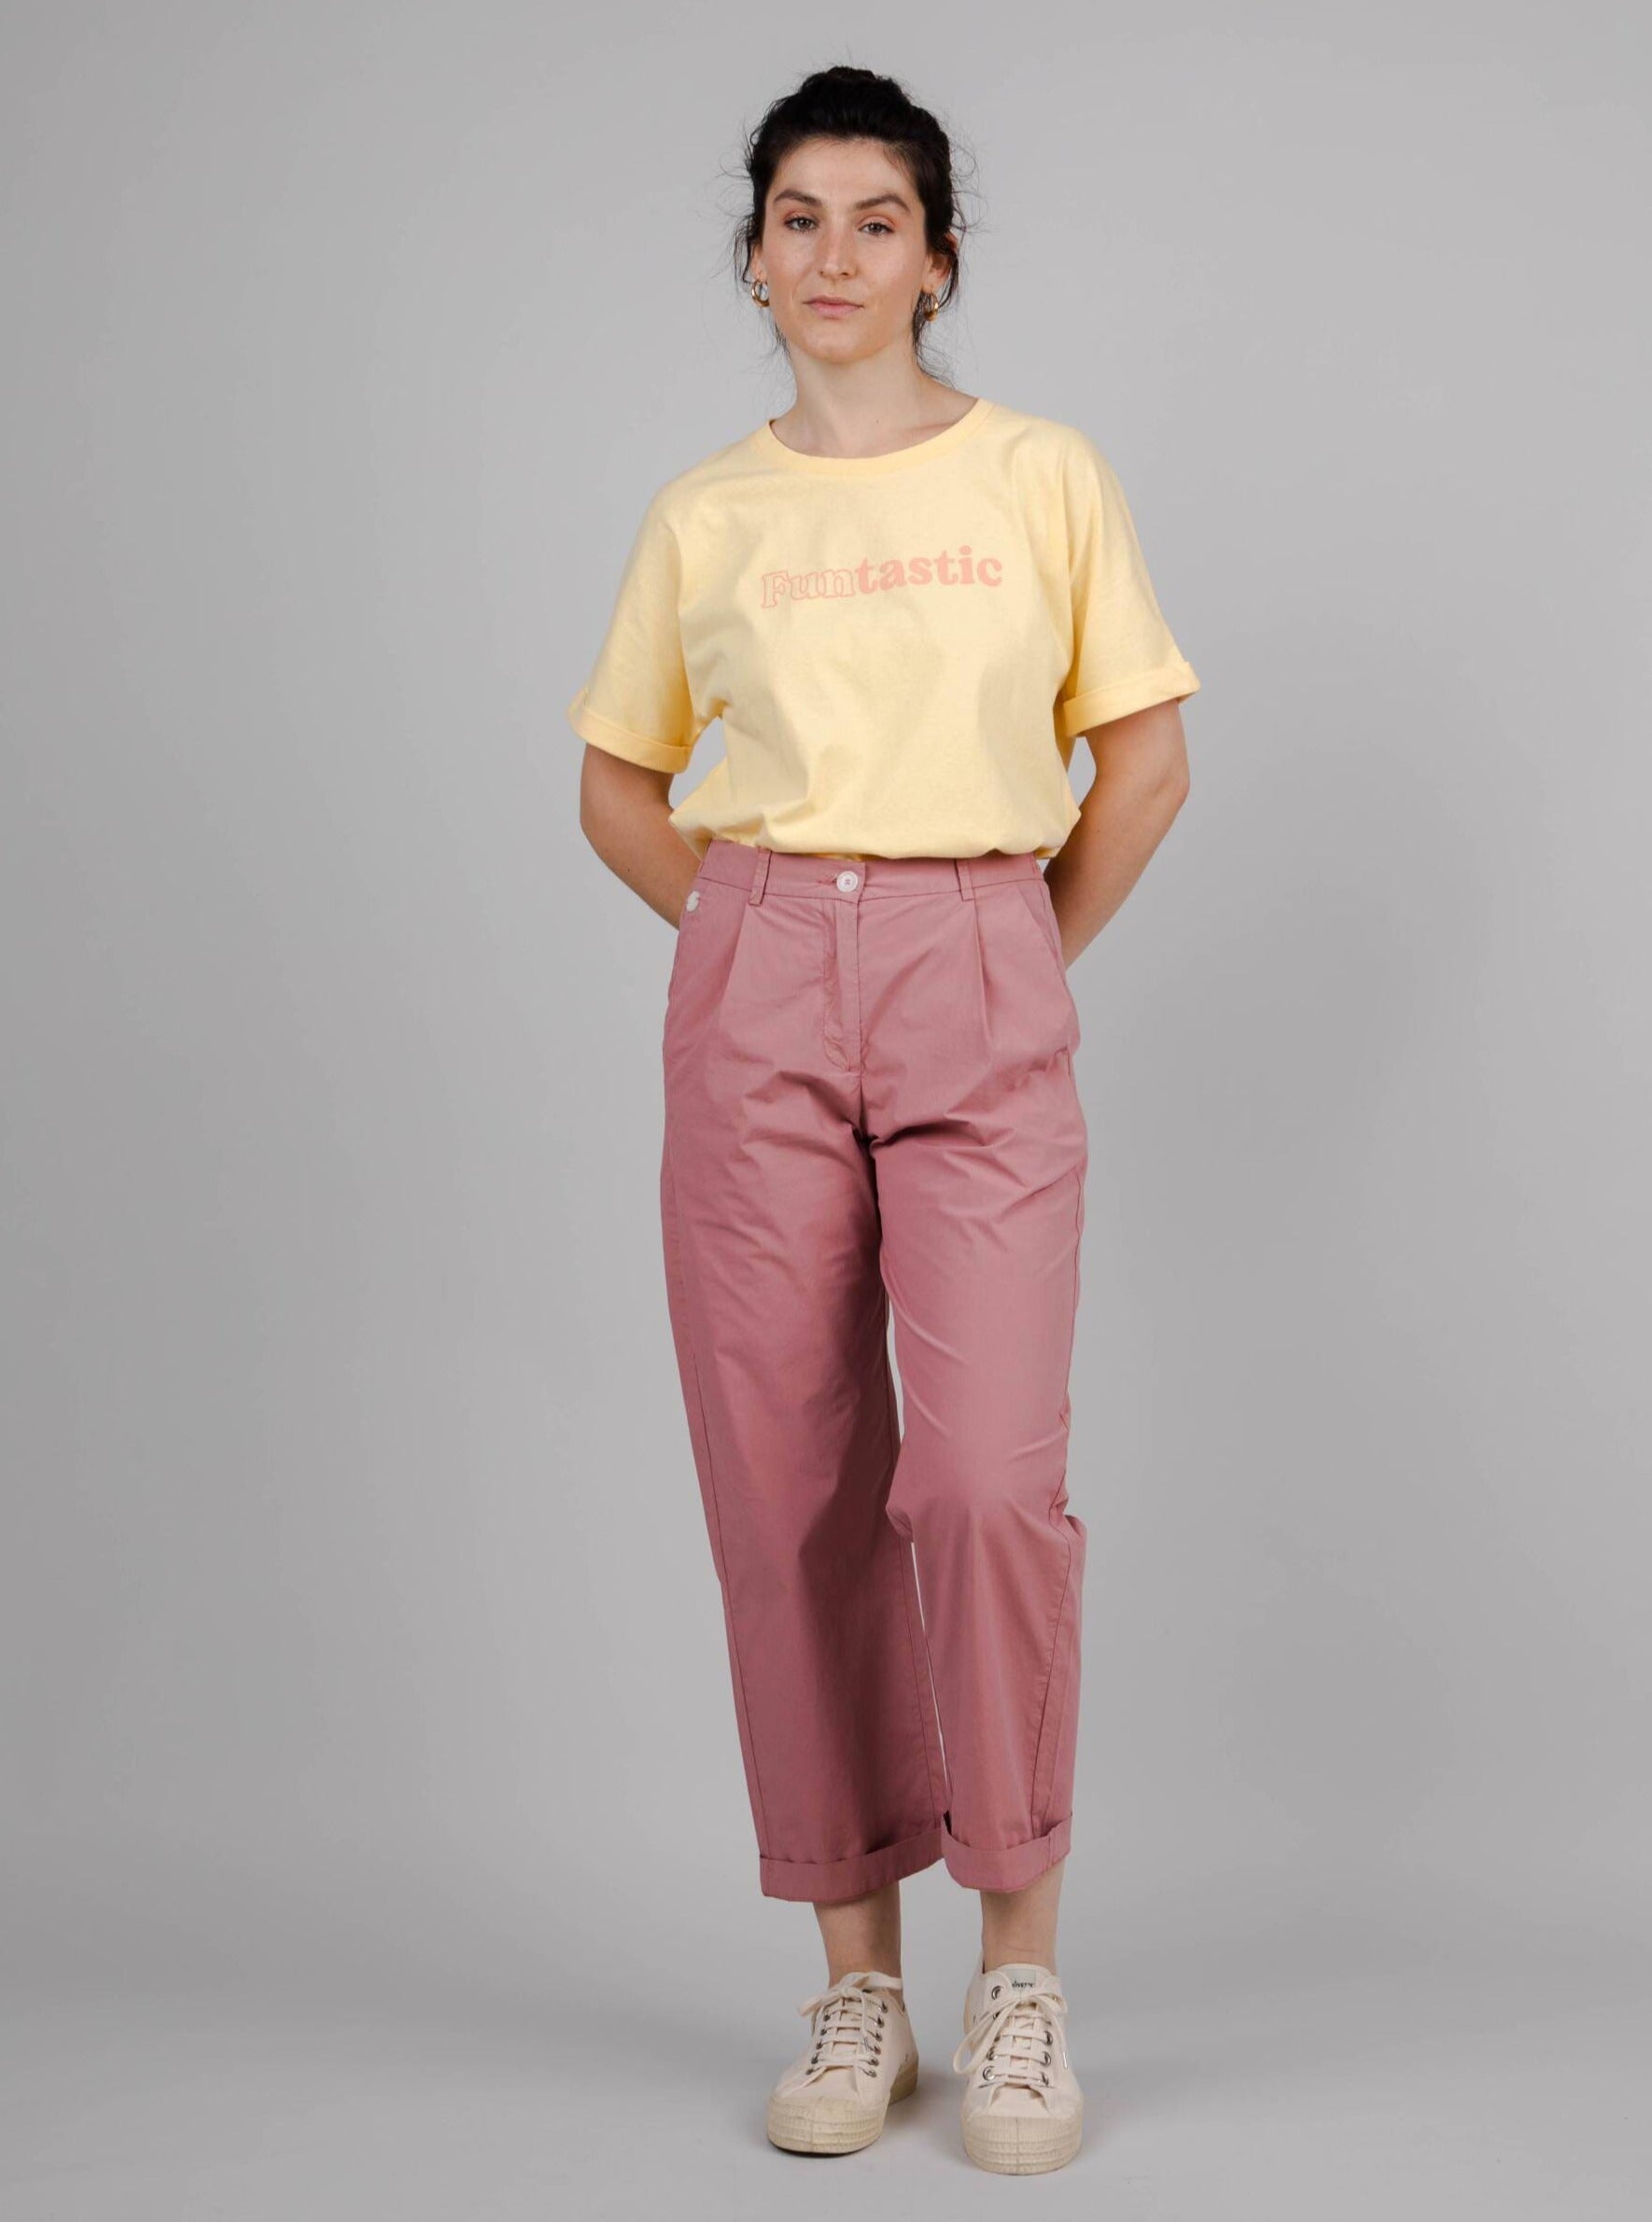 Pantalón Brava Fabrics Chino Elástico Plisado de Algodón Orgánico moda sostenible moda ética